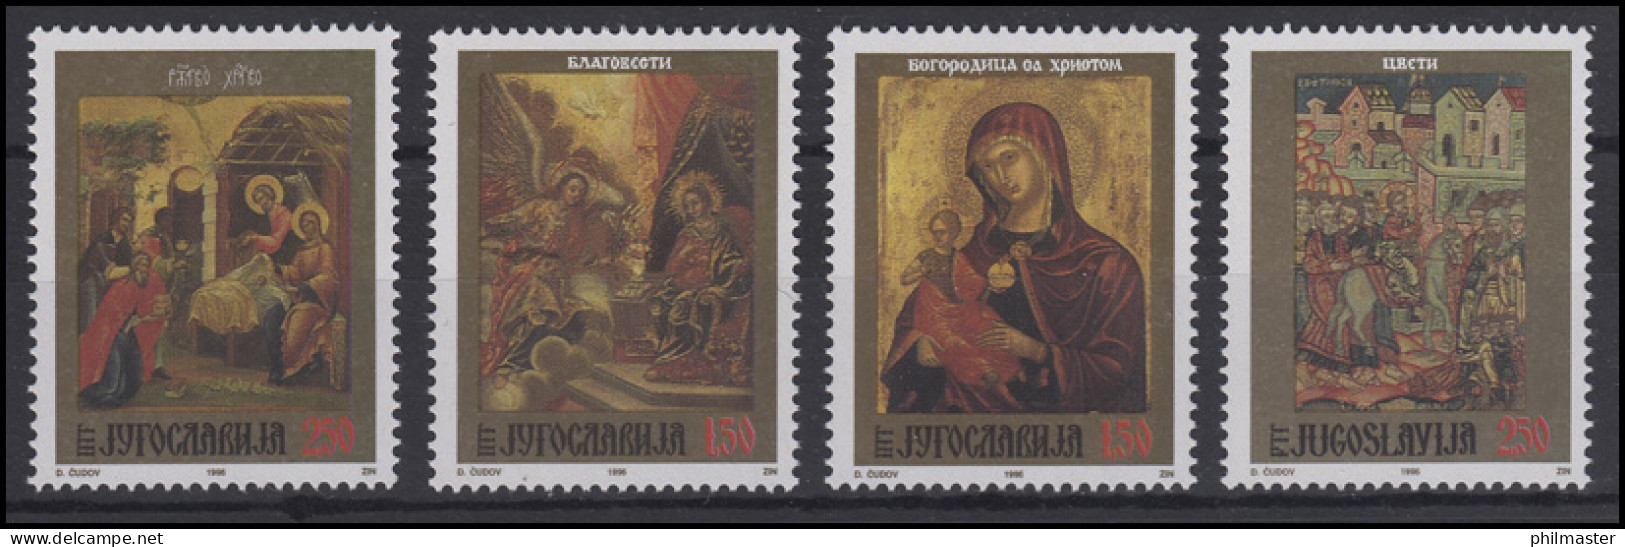 Jugoslawien: Fresken & Wandmalereien - Heilige 1996, 4 Werte, Satz **  - Christianity